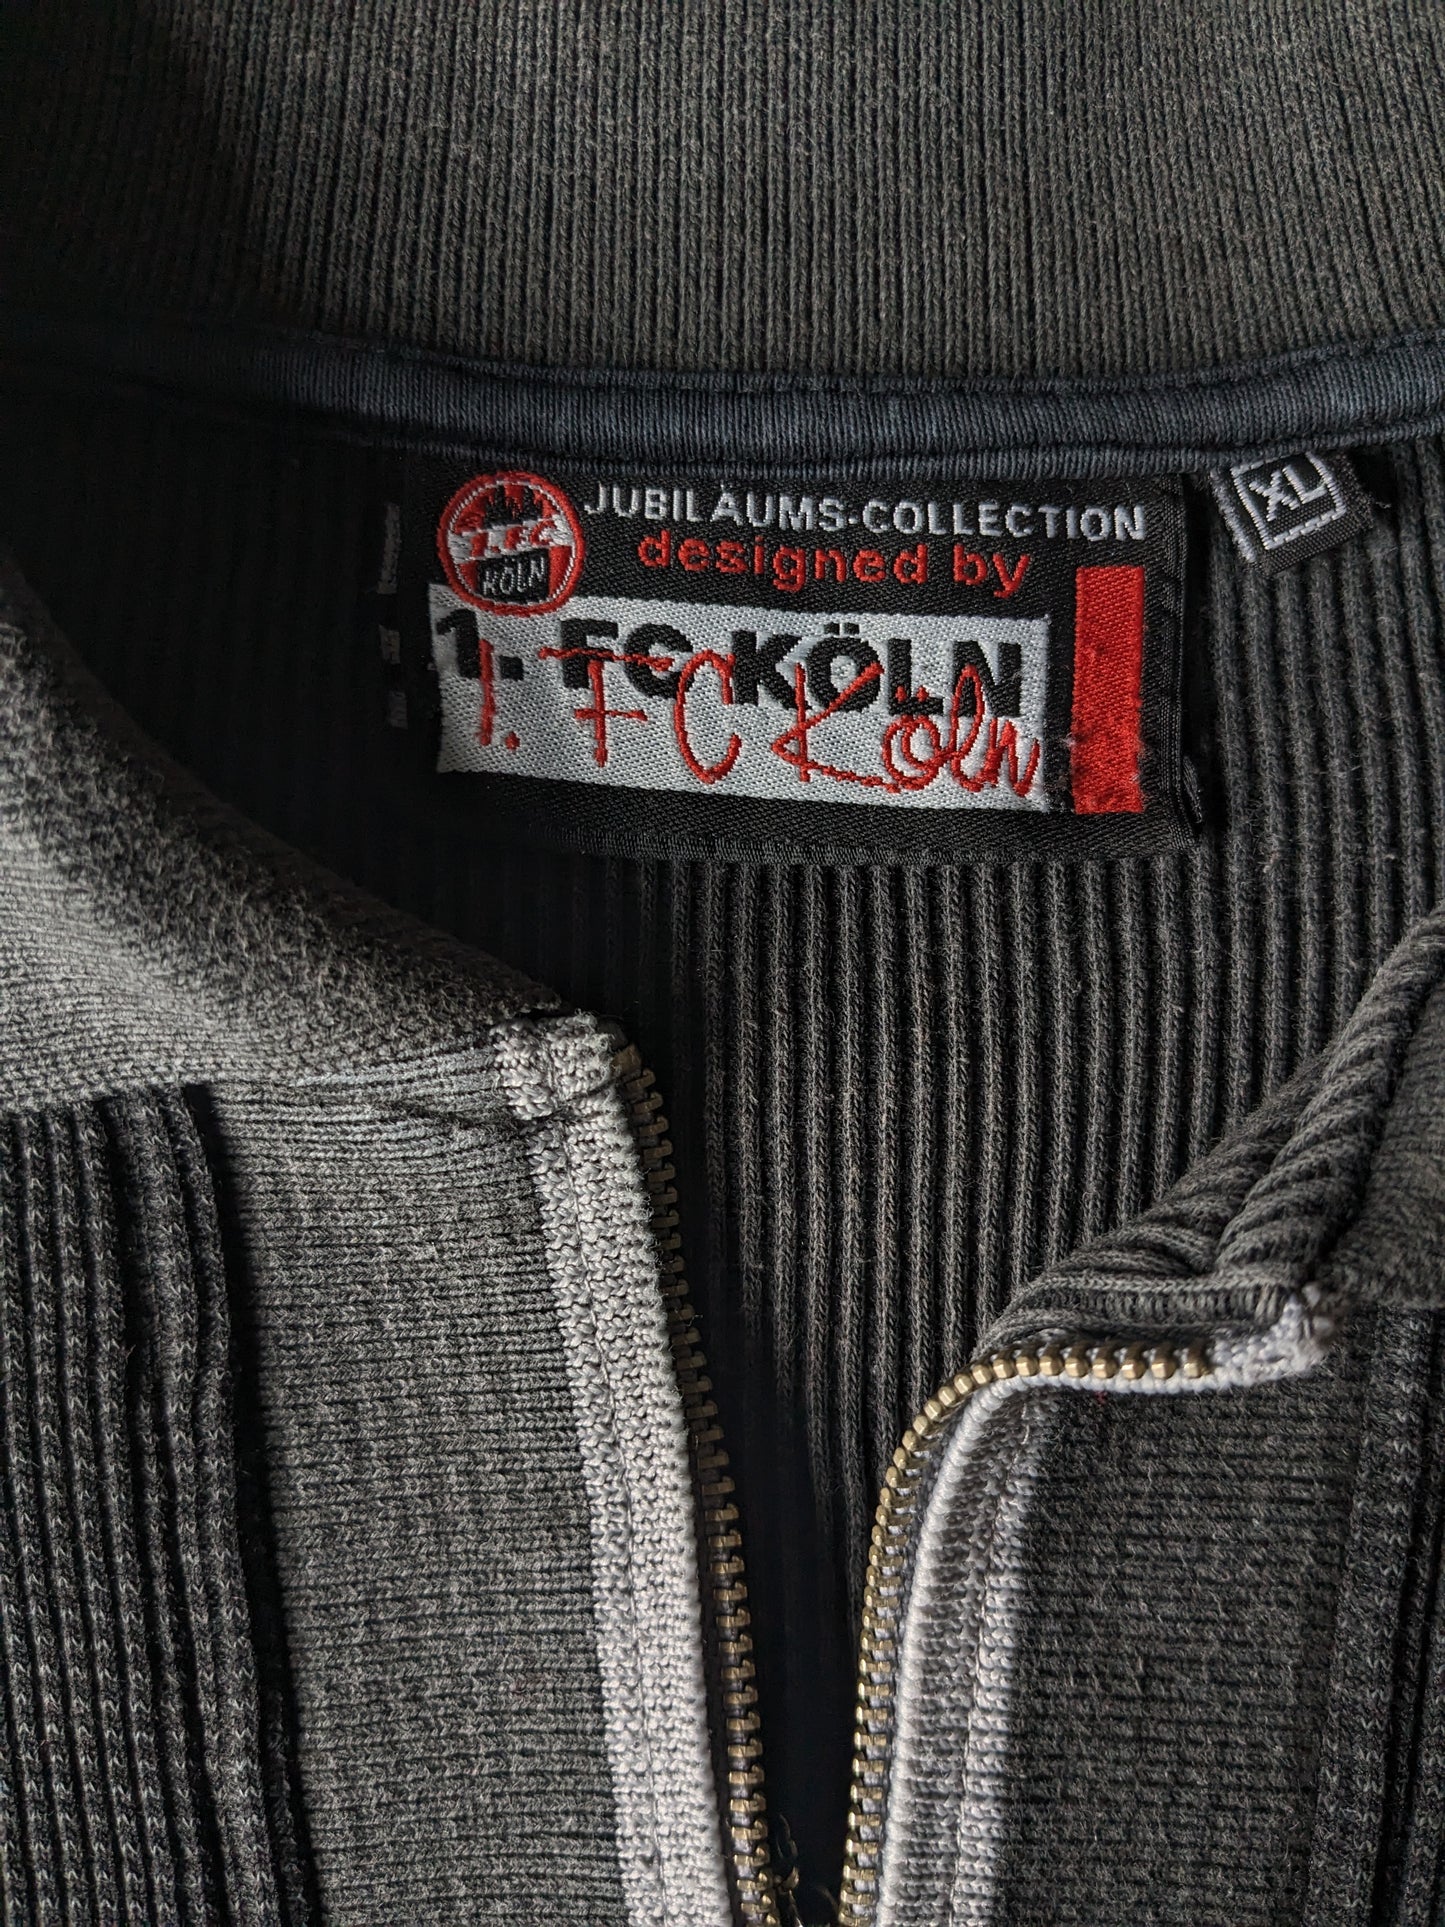 Unique jubilee FC Köln sweater with zipper. "50 years FC Köln". Dark gray colored. Size XL.